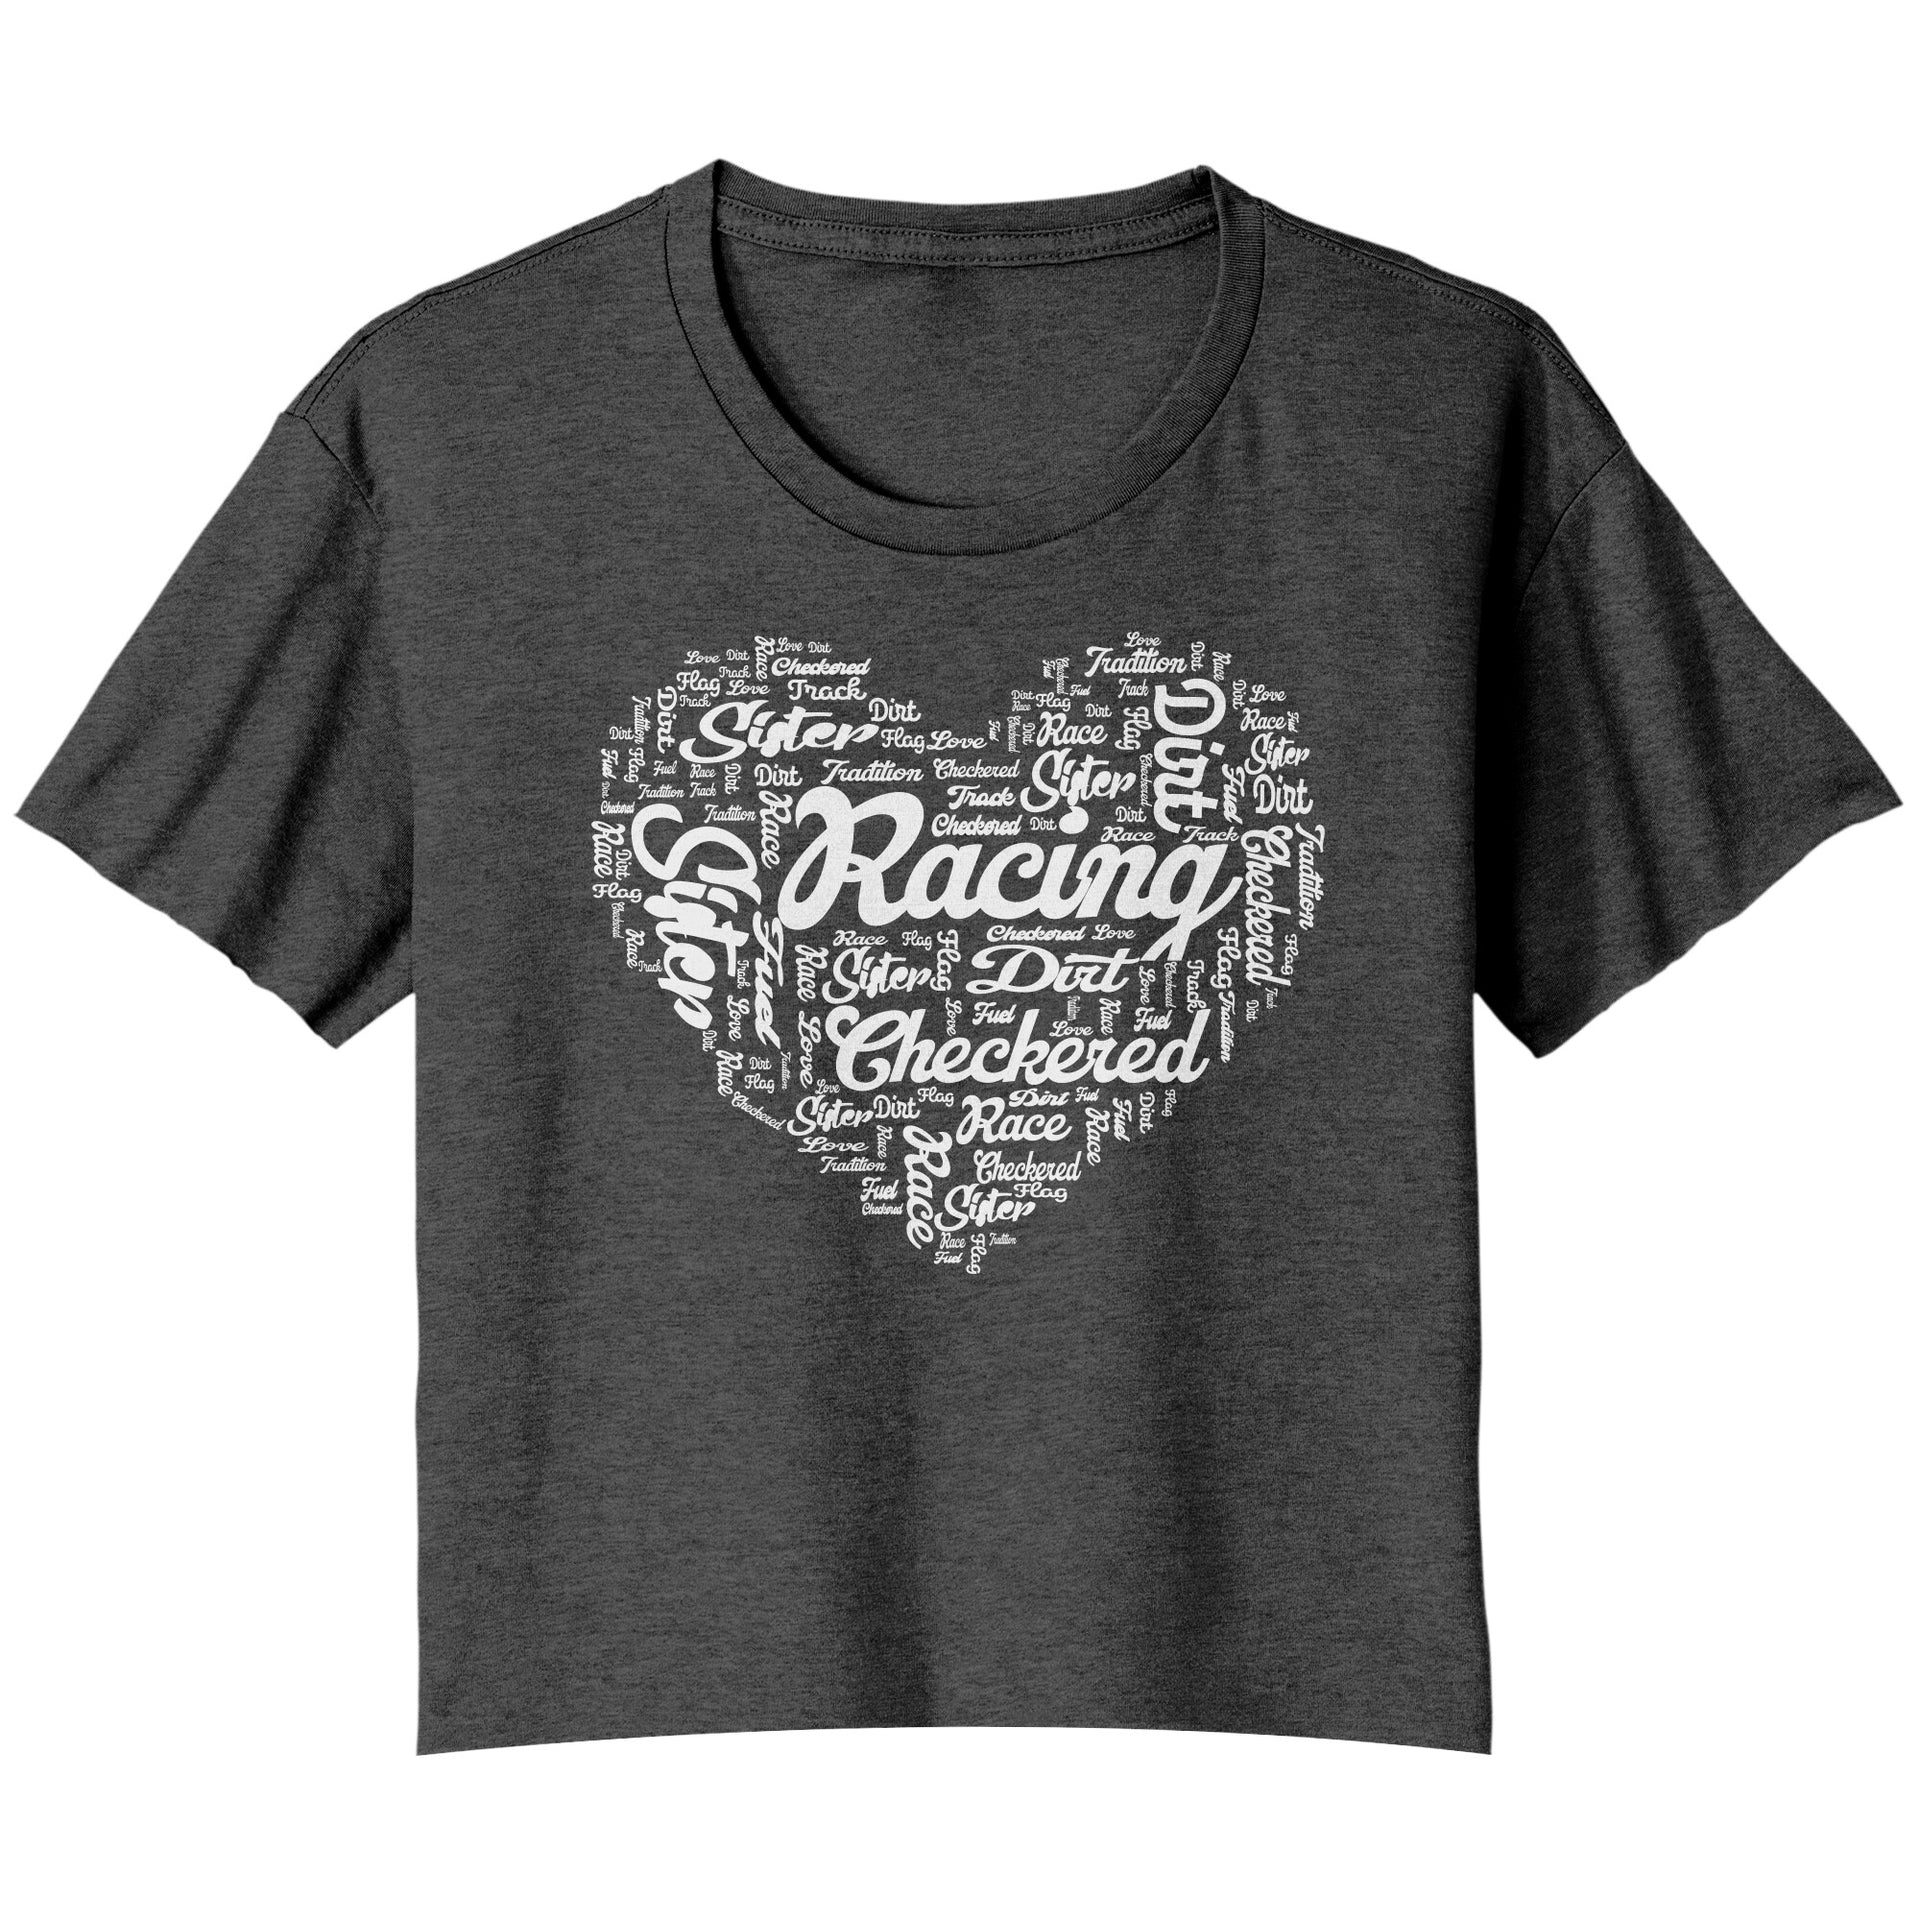 Dirt Track Racing Sister Crop T-shirt